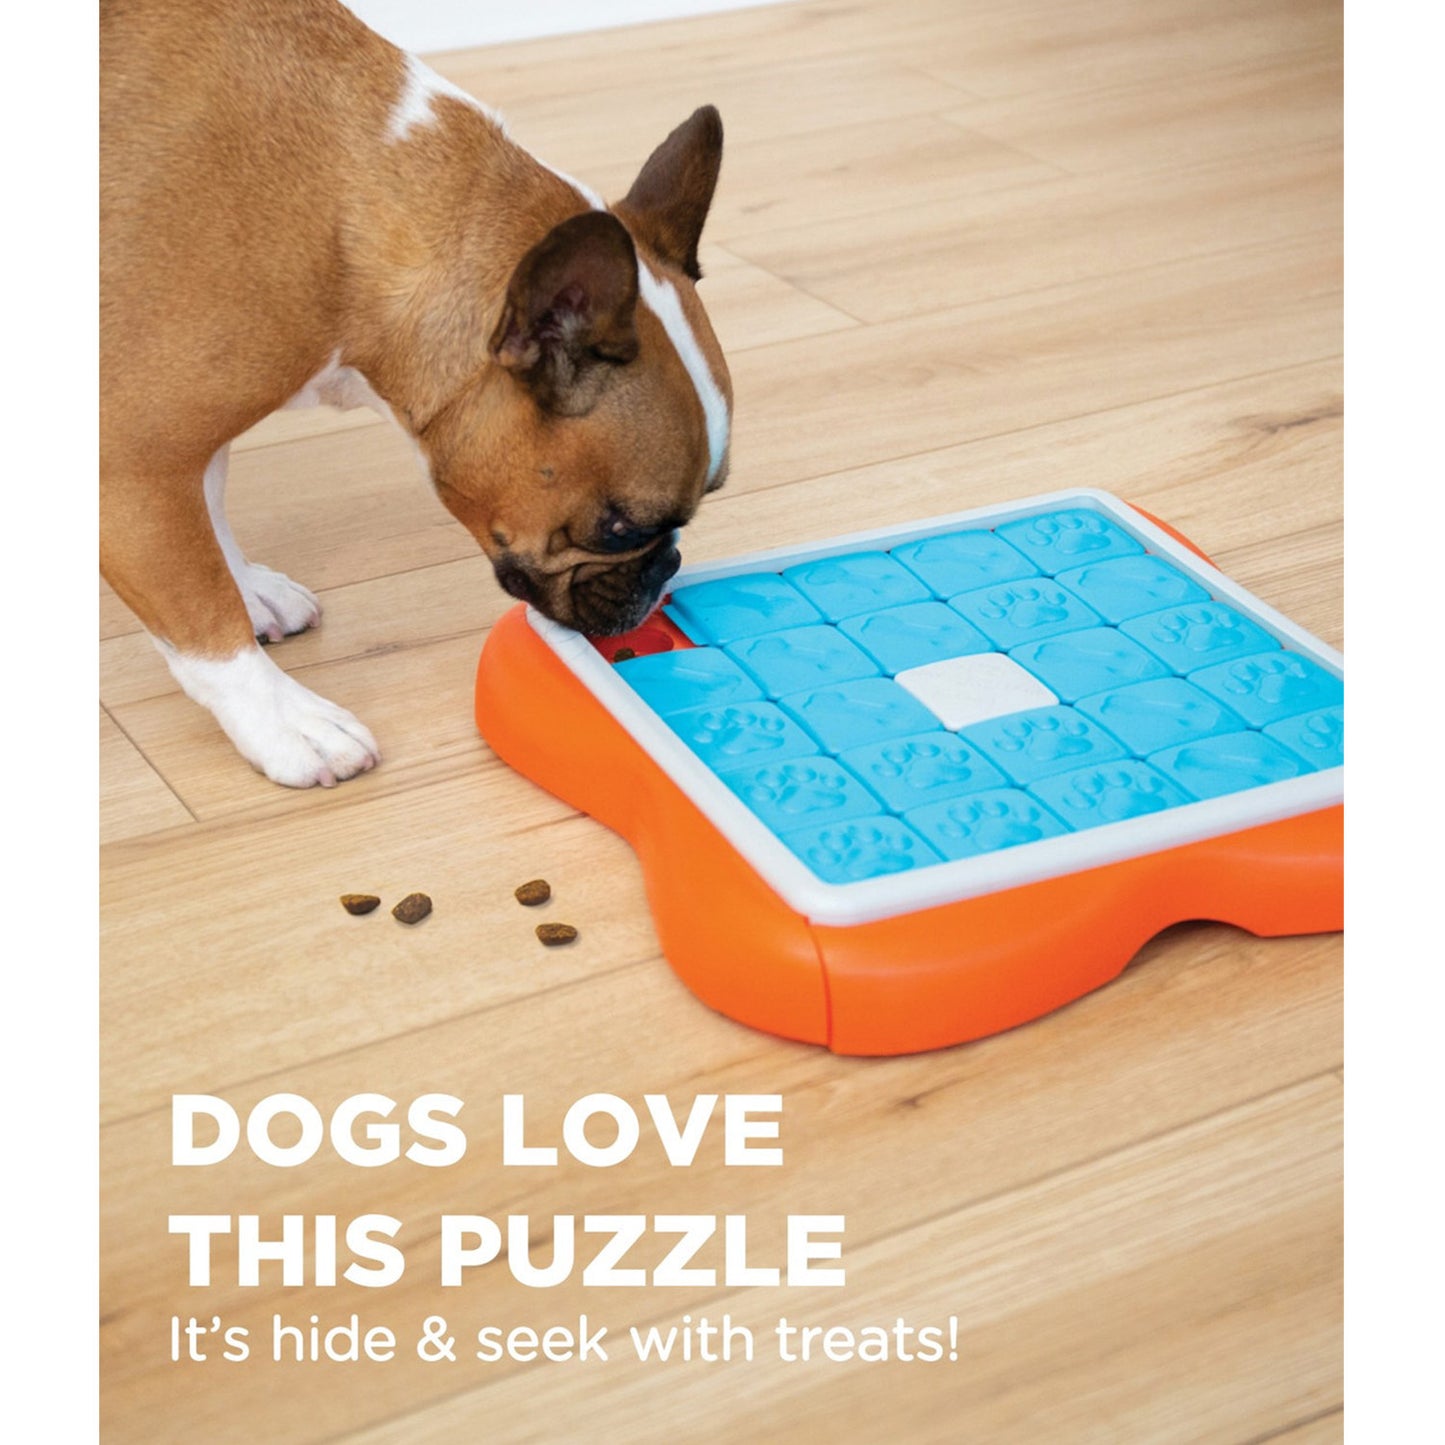 Nina Ottosson Challenge Slider Interactive Treat Puzzle Dog Toy